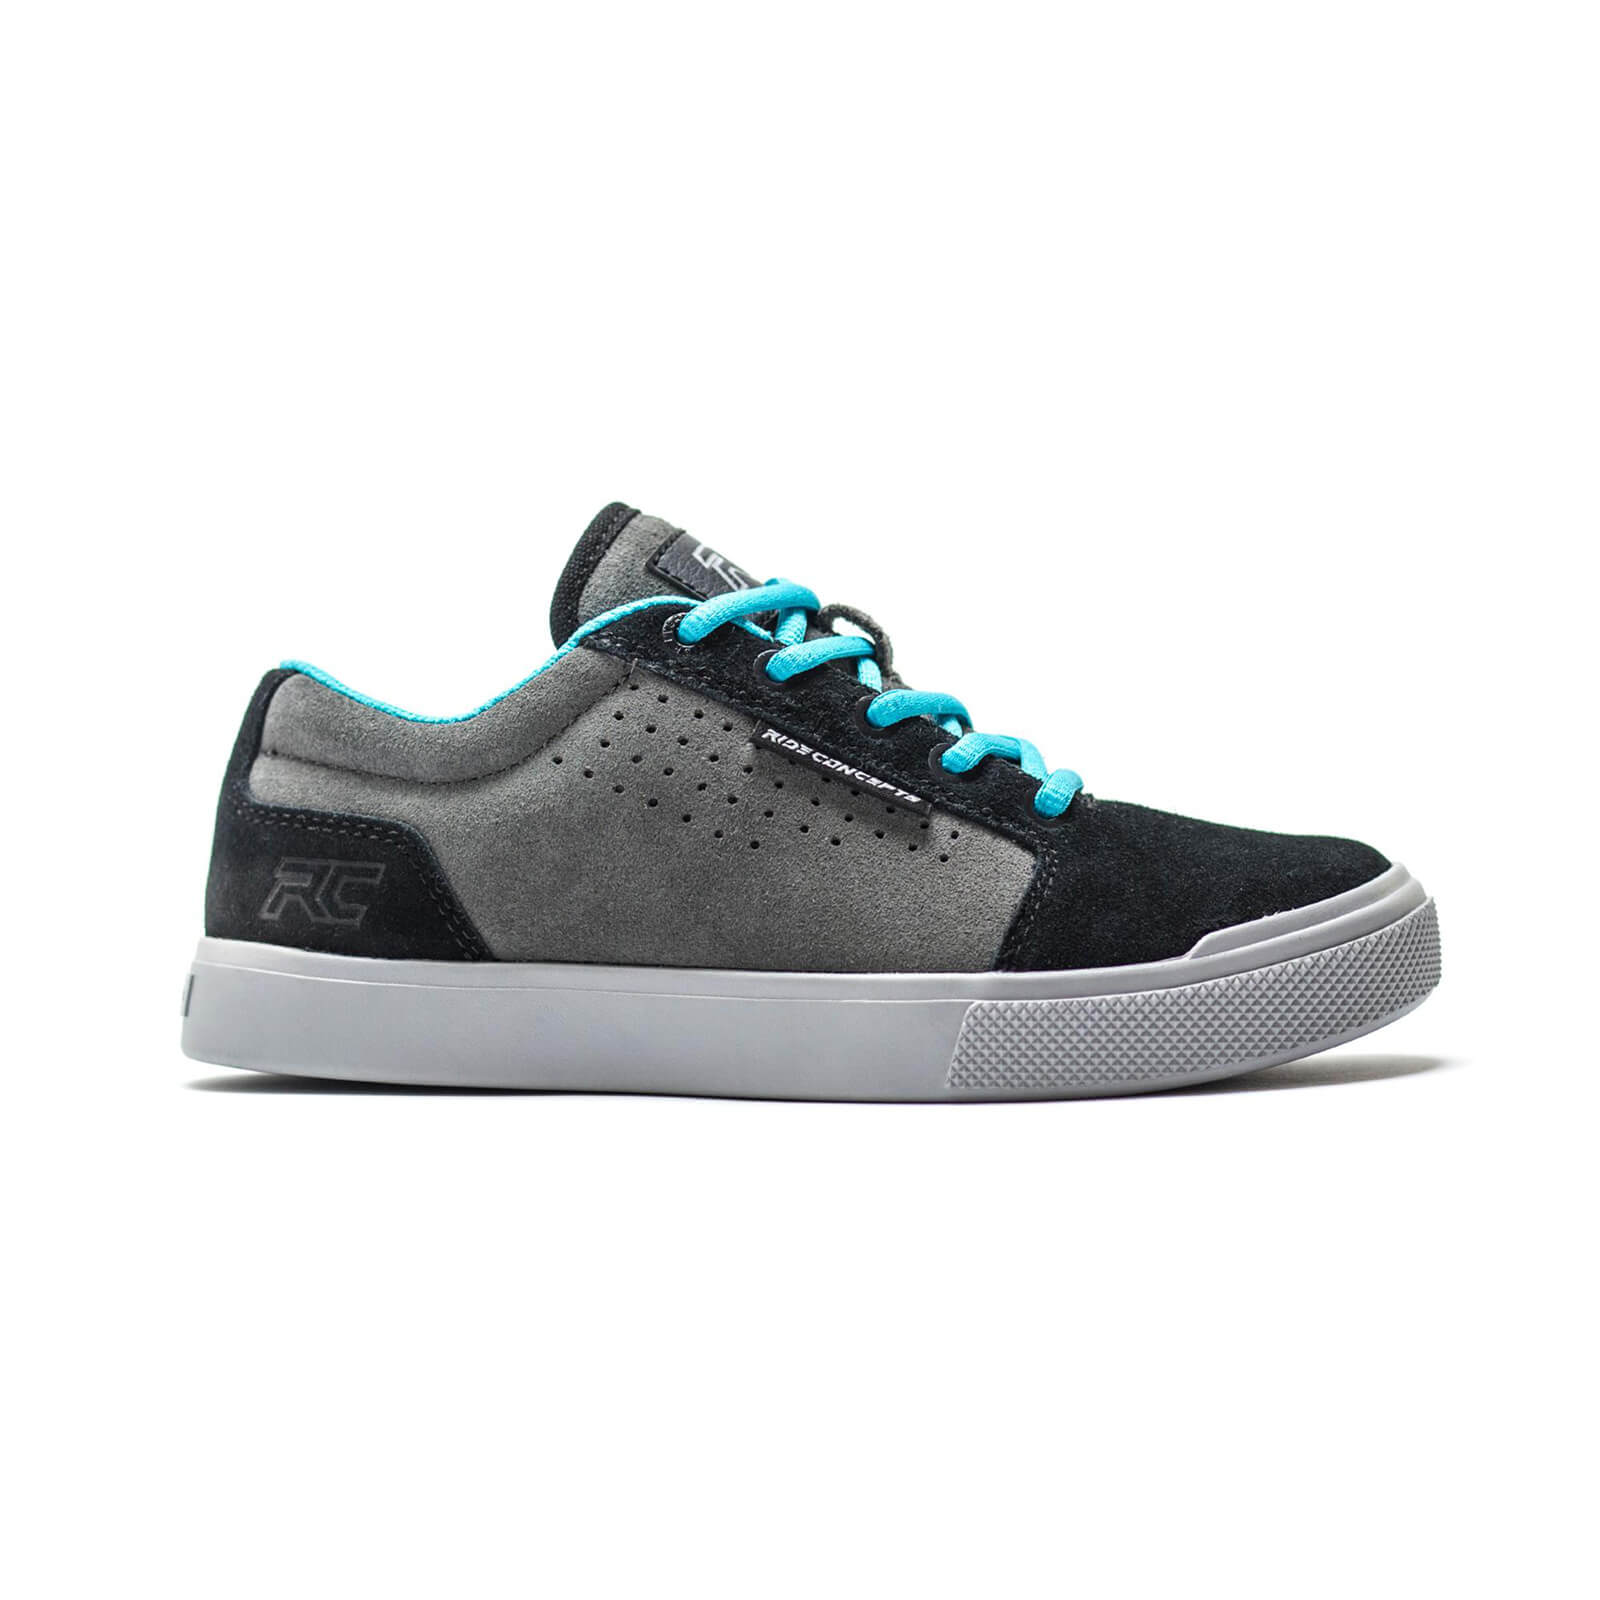 Ride Concepts Youth Vice Flat MTB Shoes - UK 2/EU 35/US 3 - Charcoal/Black